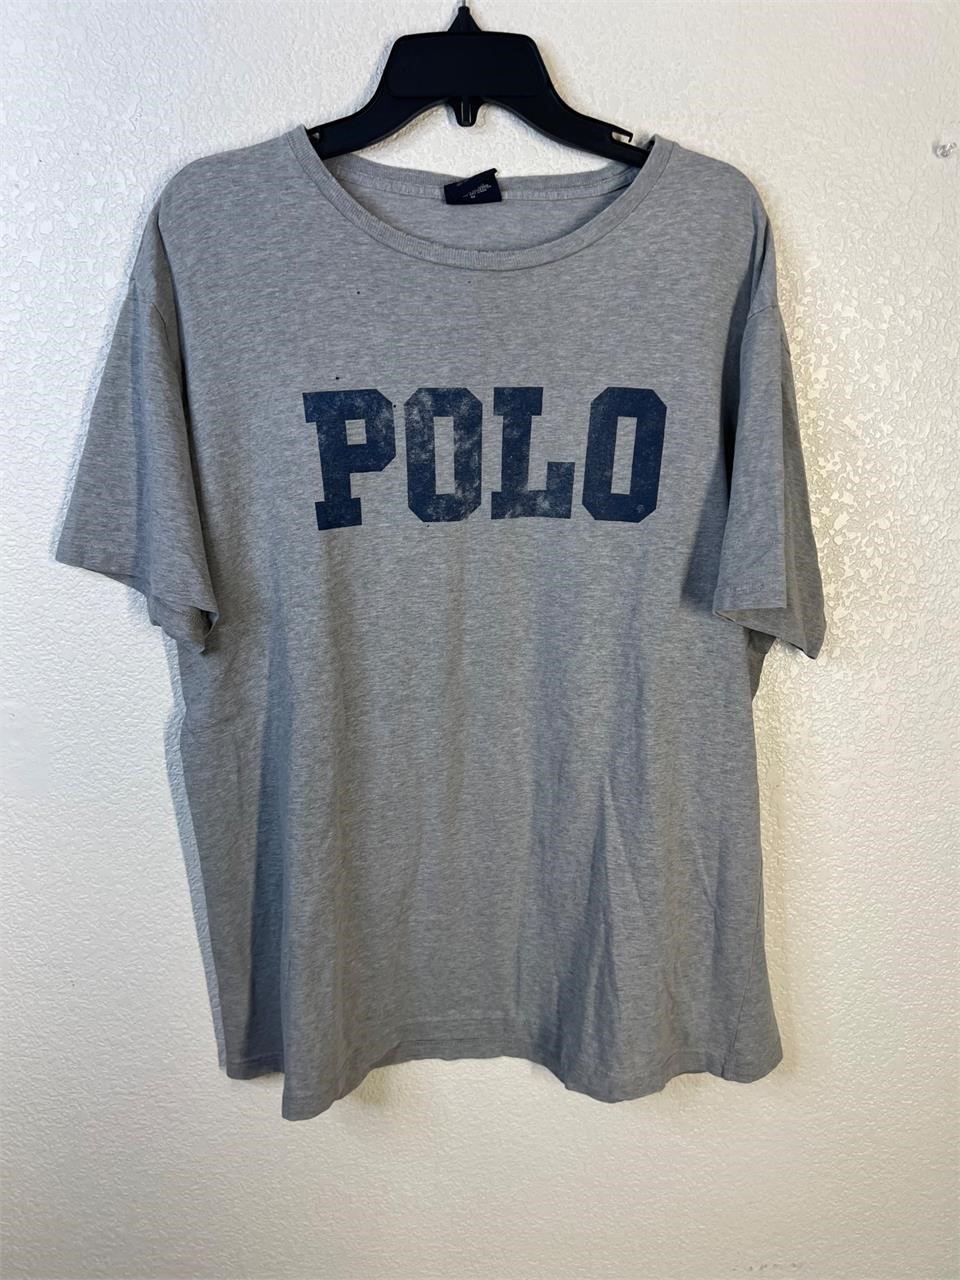 Vintage Polo Ralph Lauren Spellout Shirt